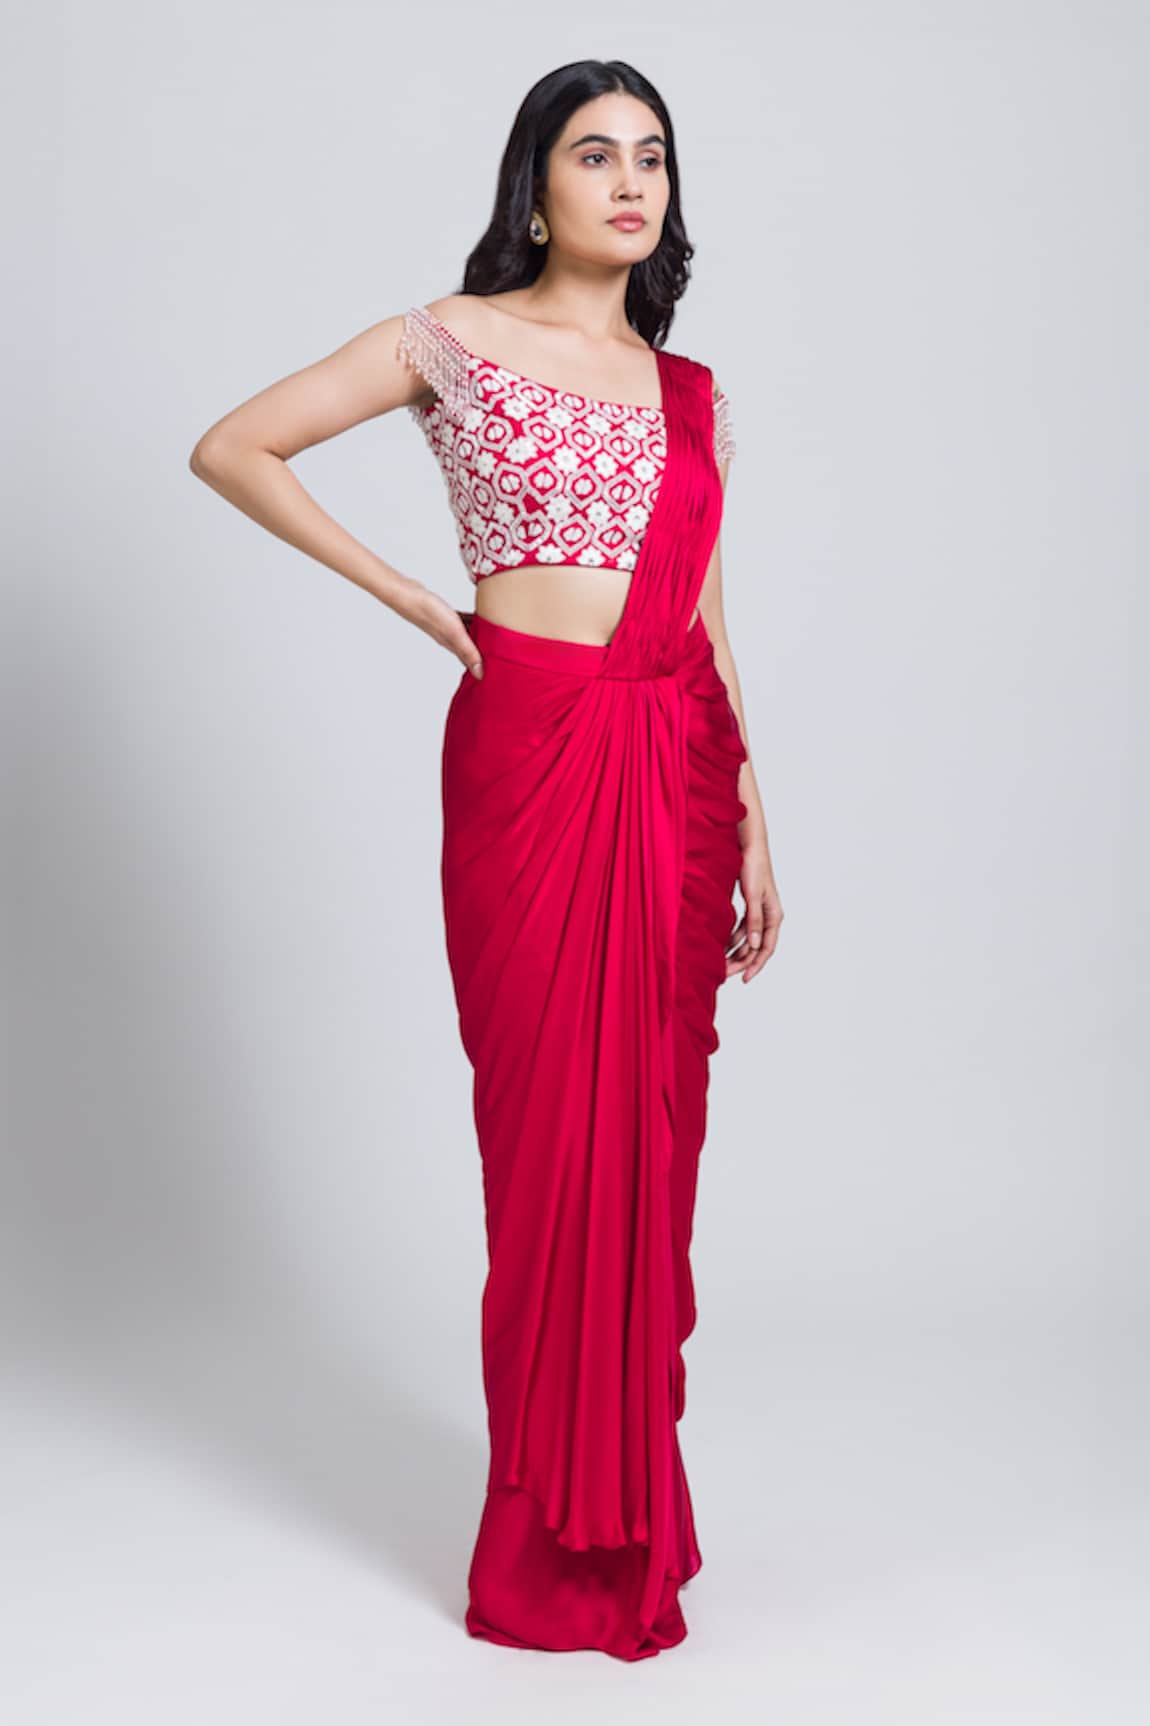 NIMA FASHIONS Pre-Draped Saree With Embroidered Blouse